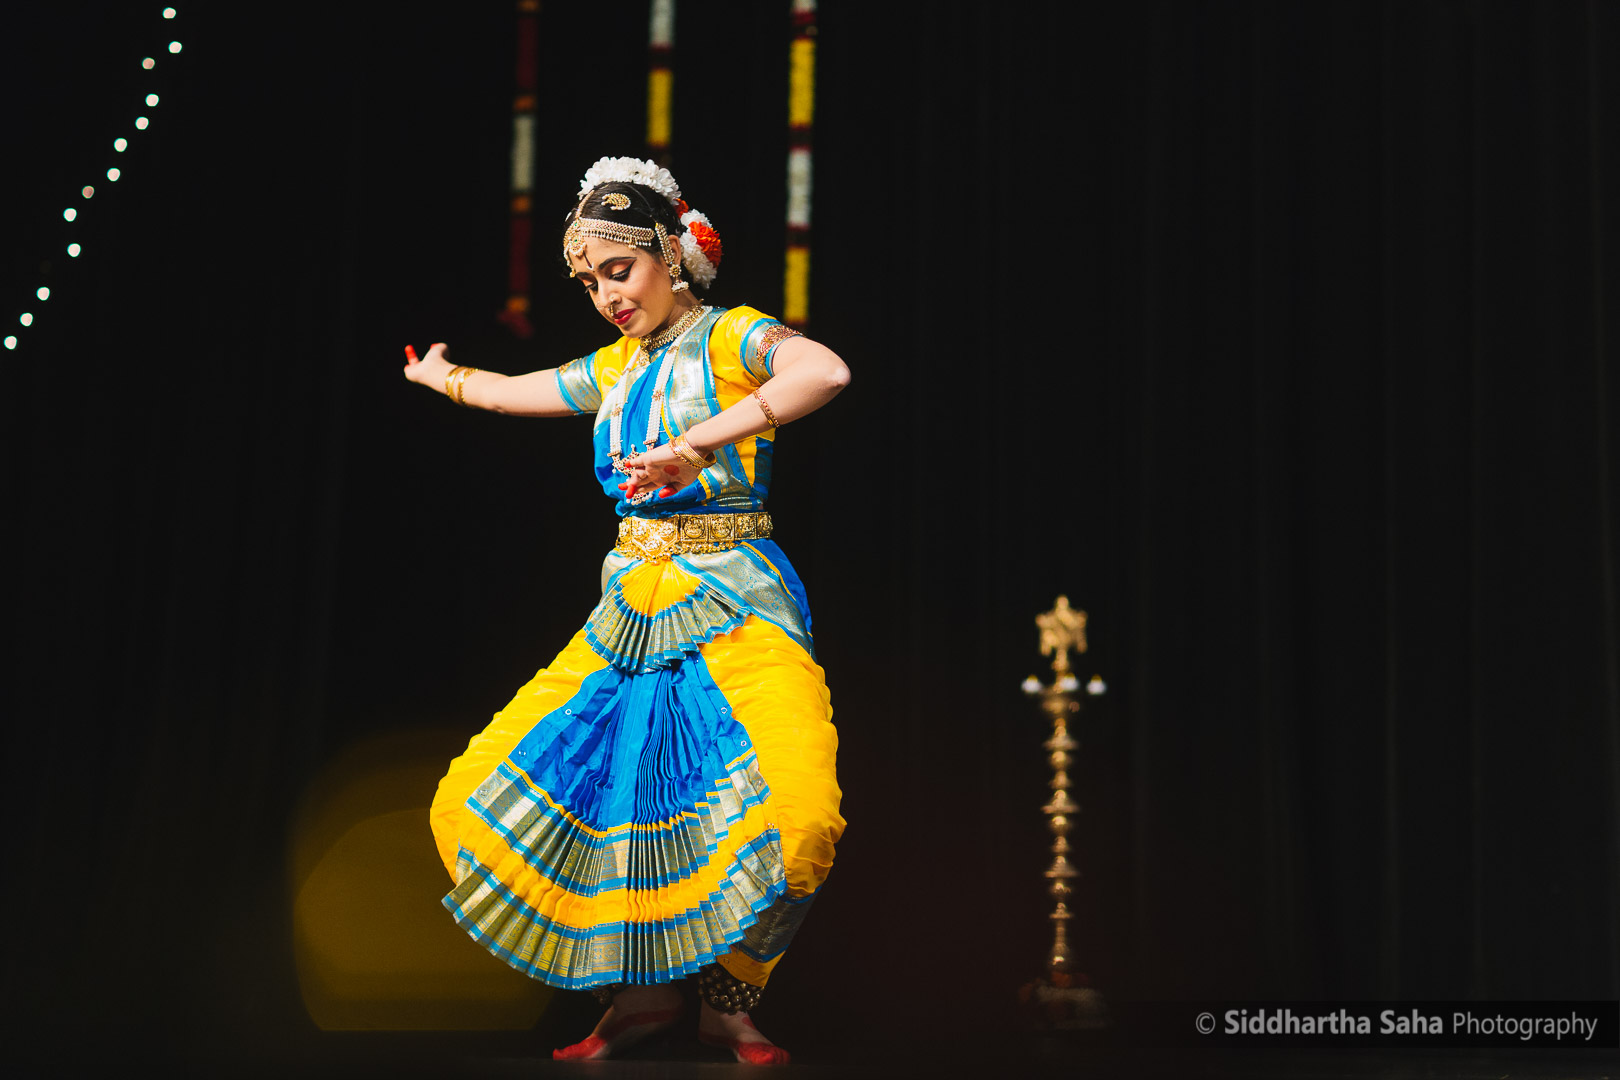 Siddhartha Saha Photography (www.siddphoto.com)